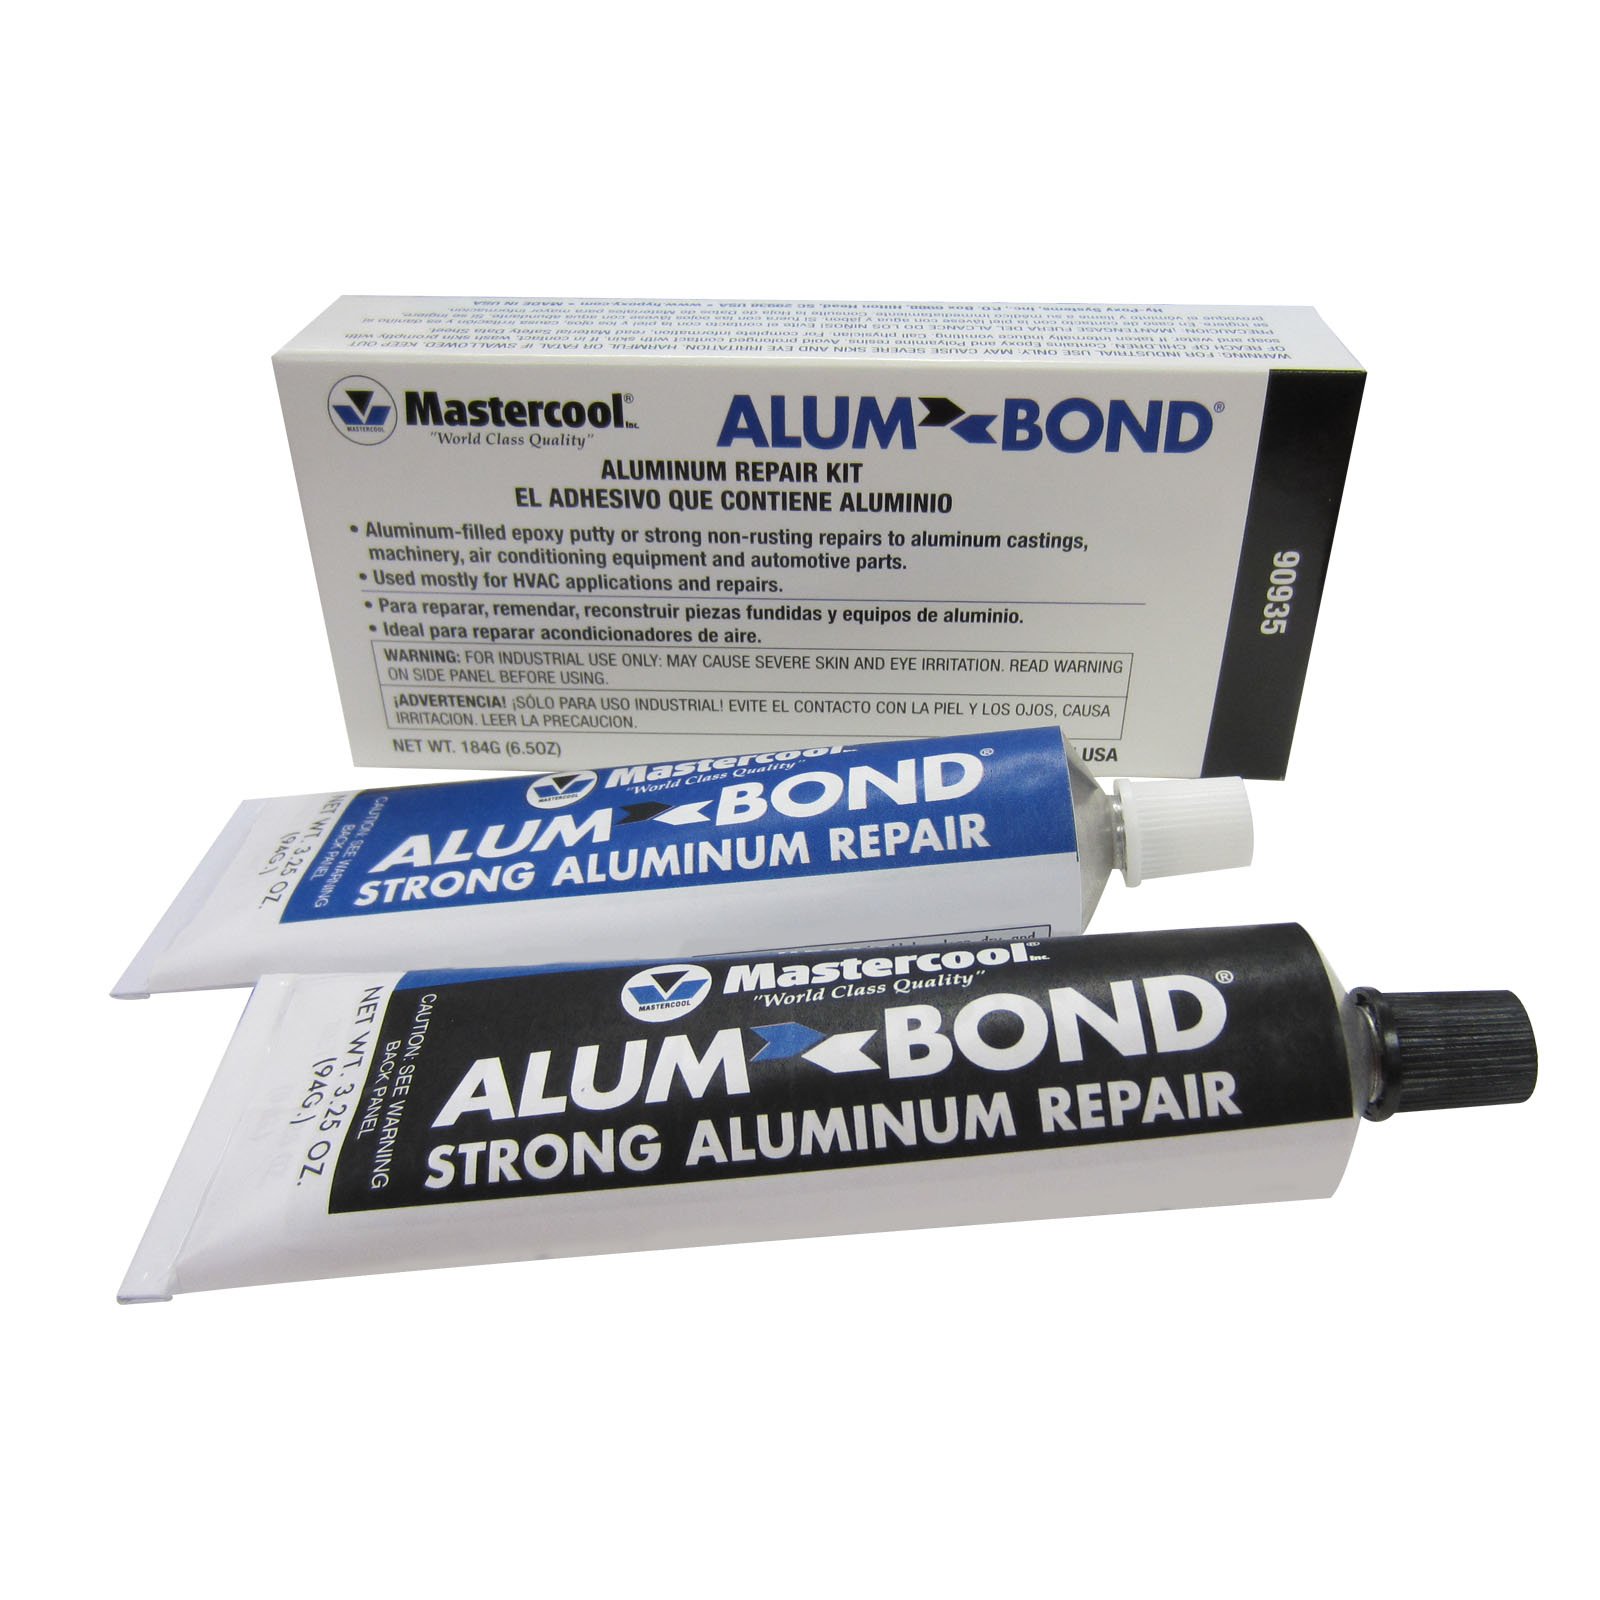 ALUM BOND - Aluminium Repair Kit - Hardener and Resin 184g Package